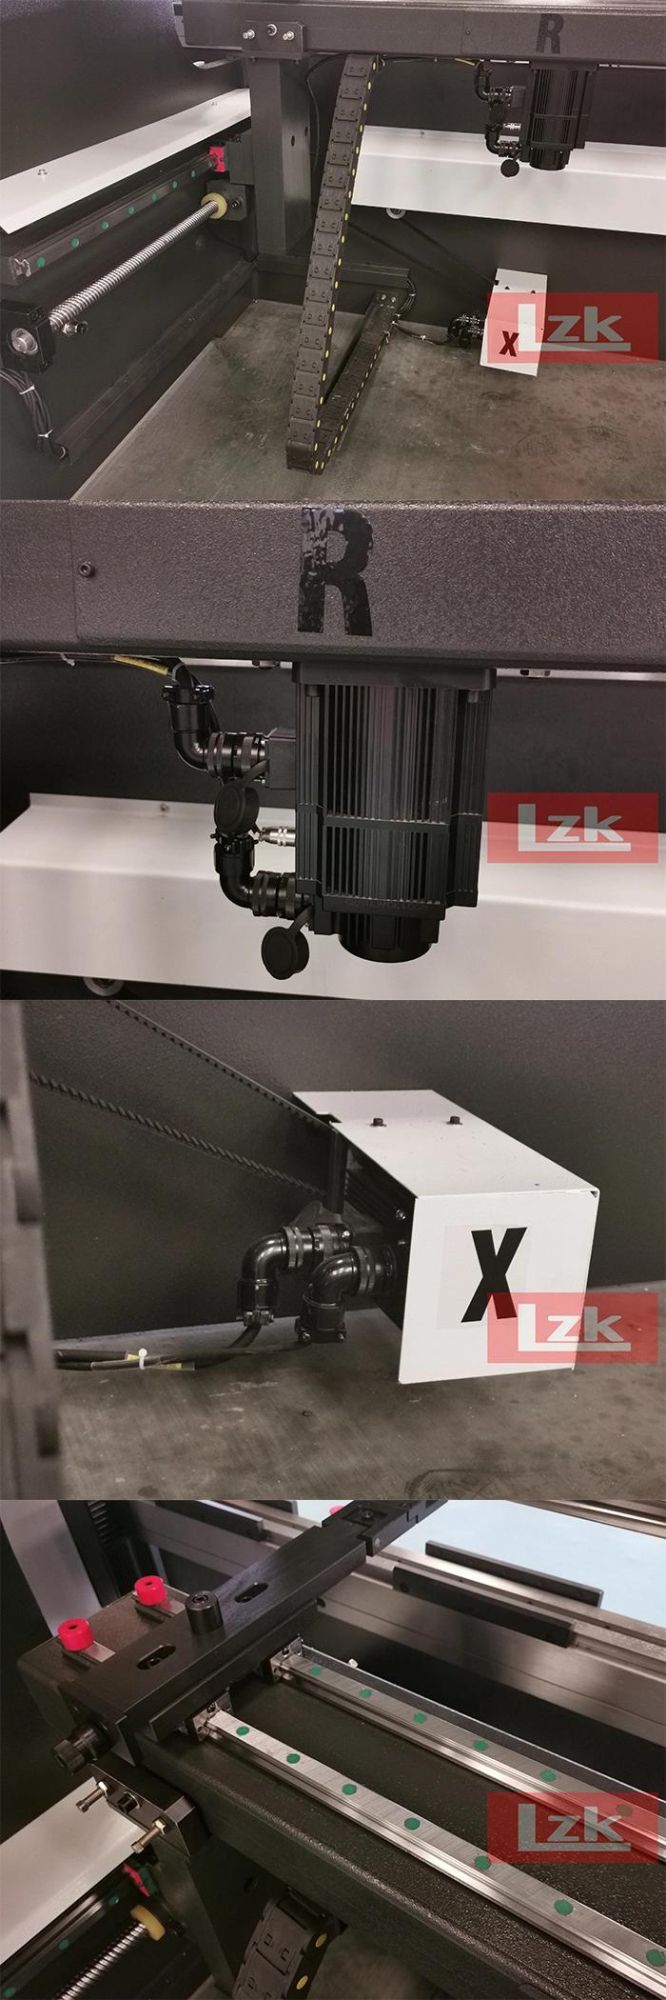 Hpb 110t3200 Hydraulic Metal Press Bending Machine From Lzk